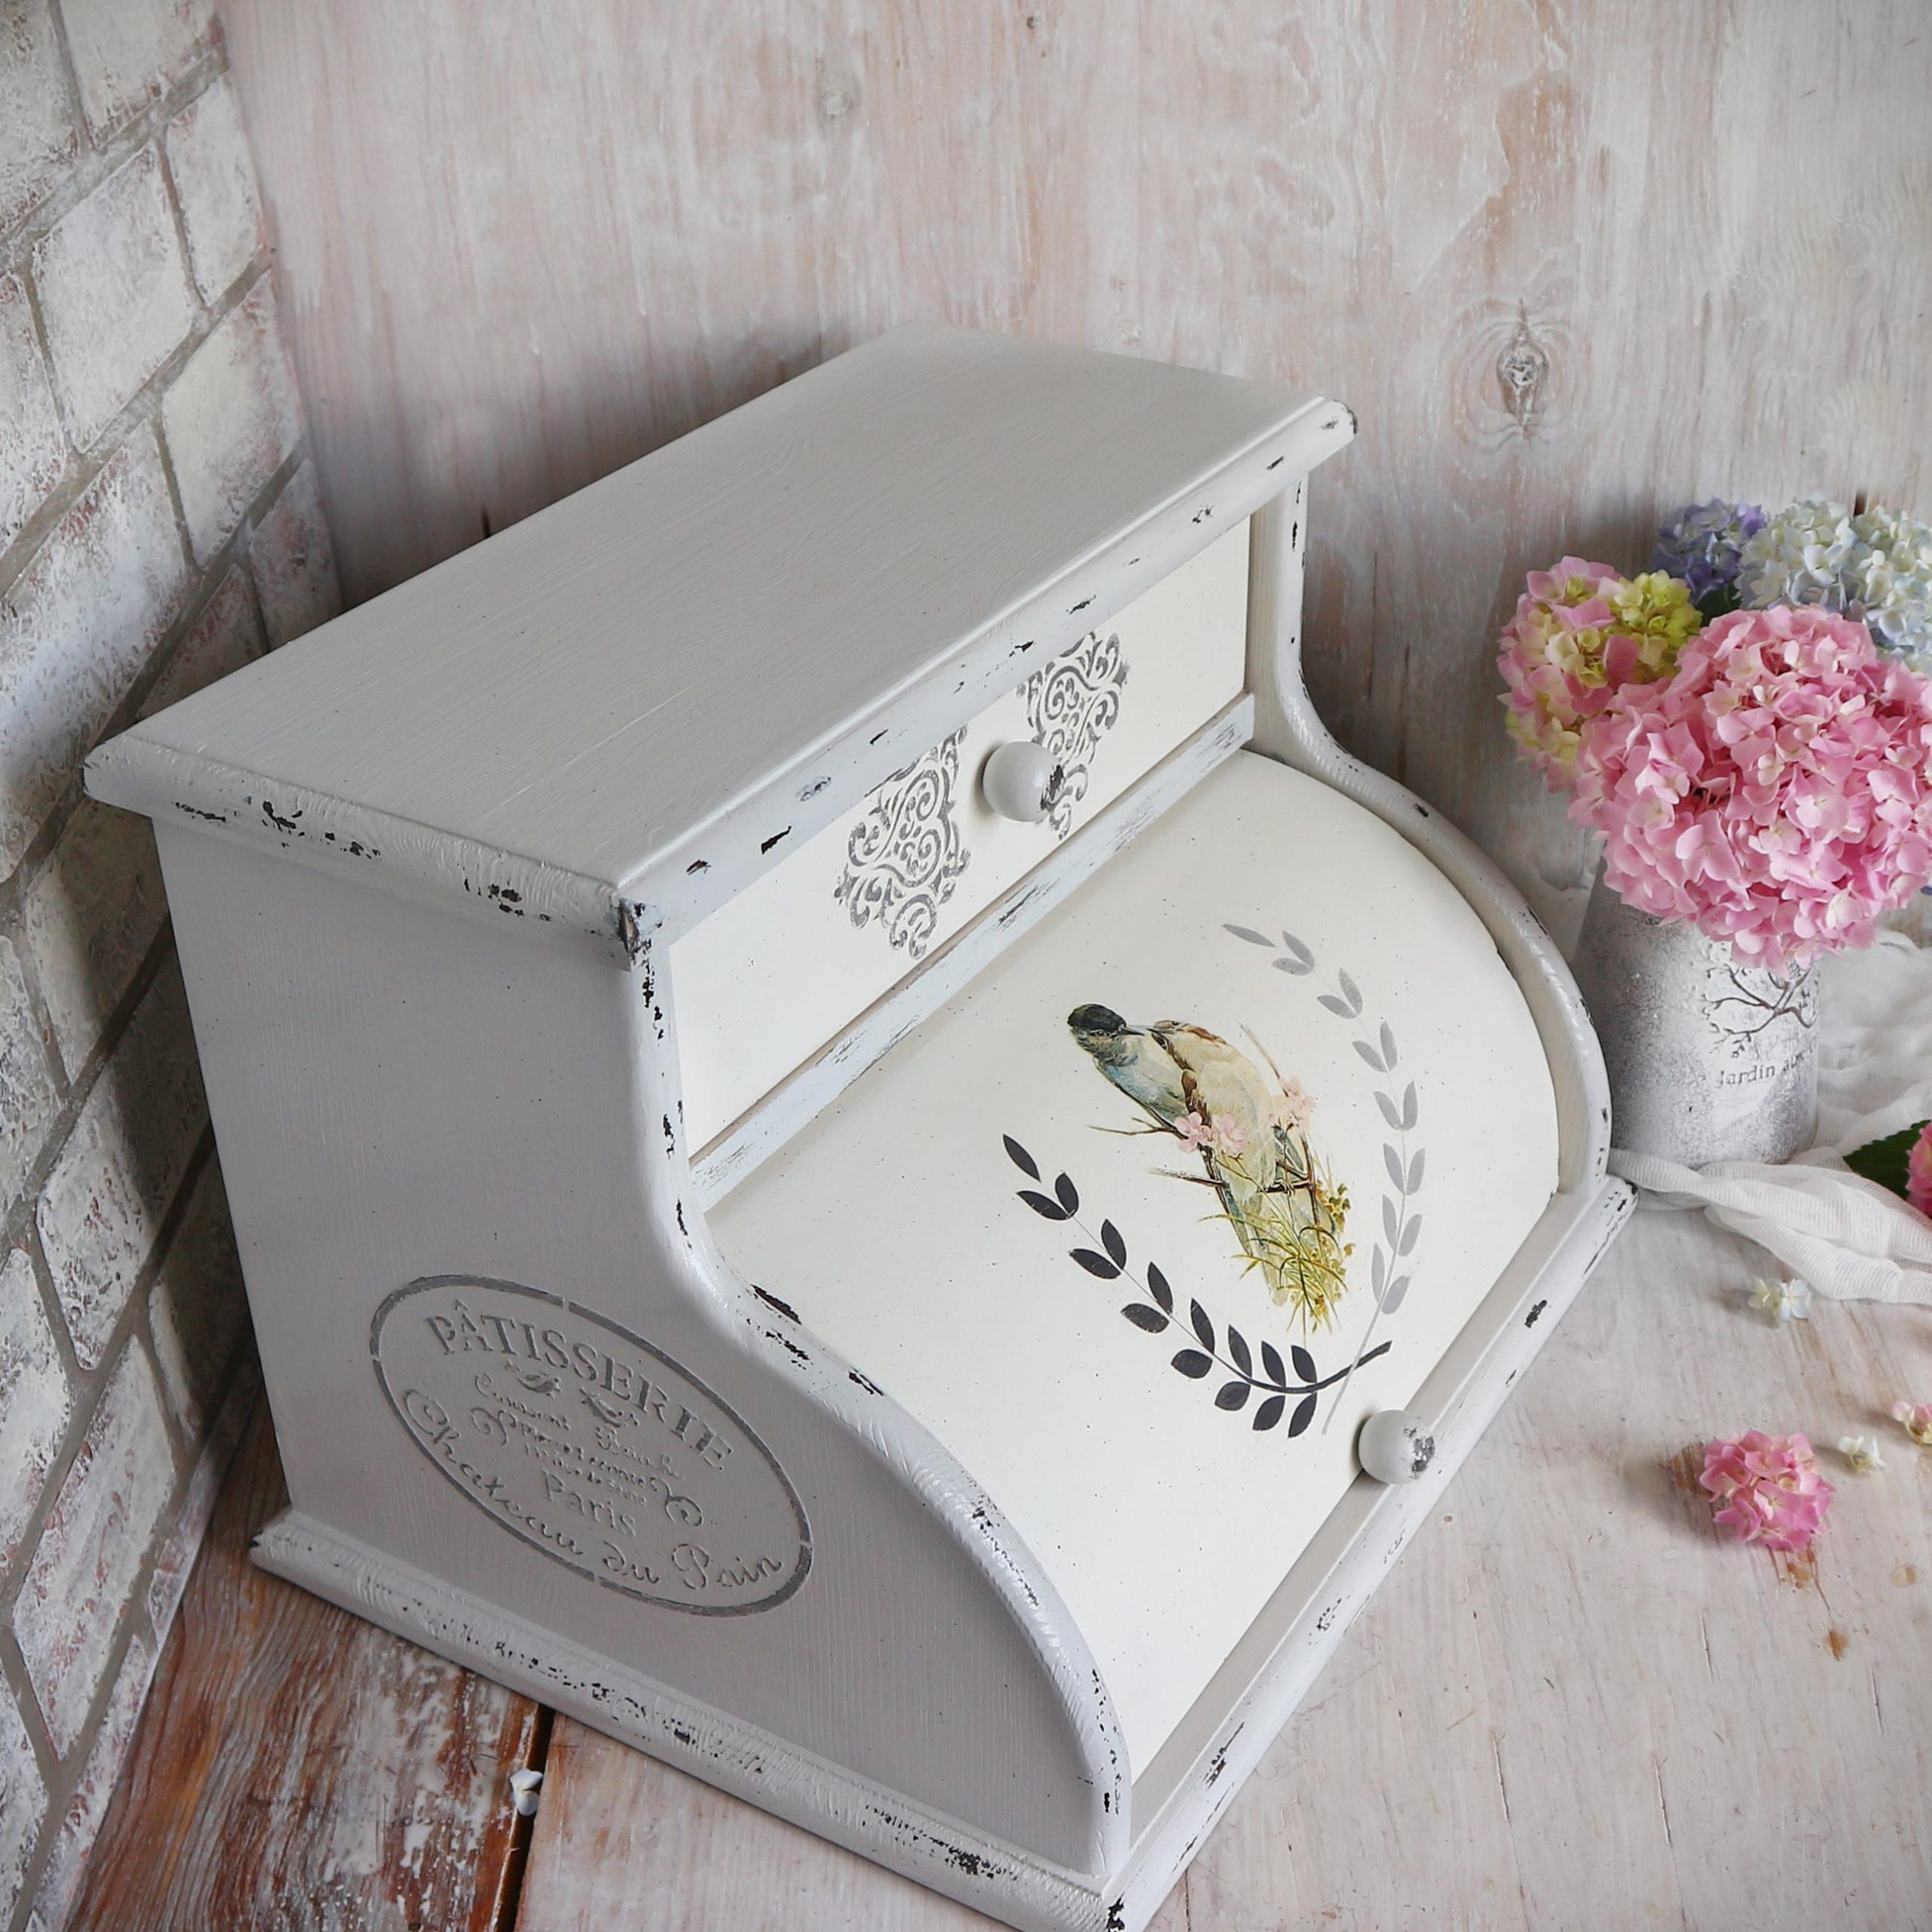 Shabby chic handmade bread box for kitchen adove